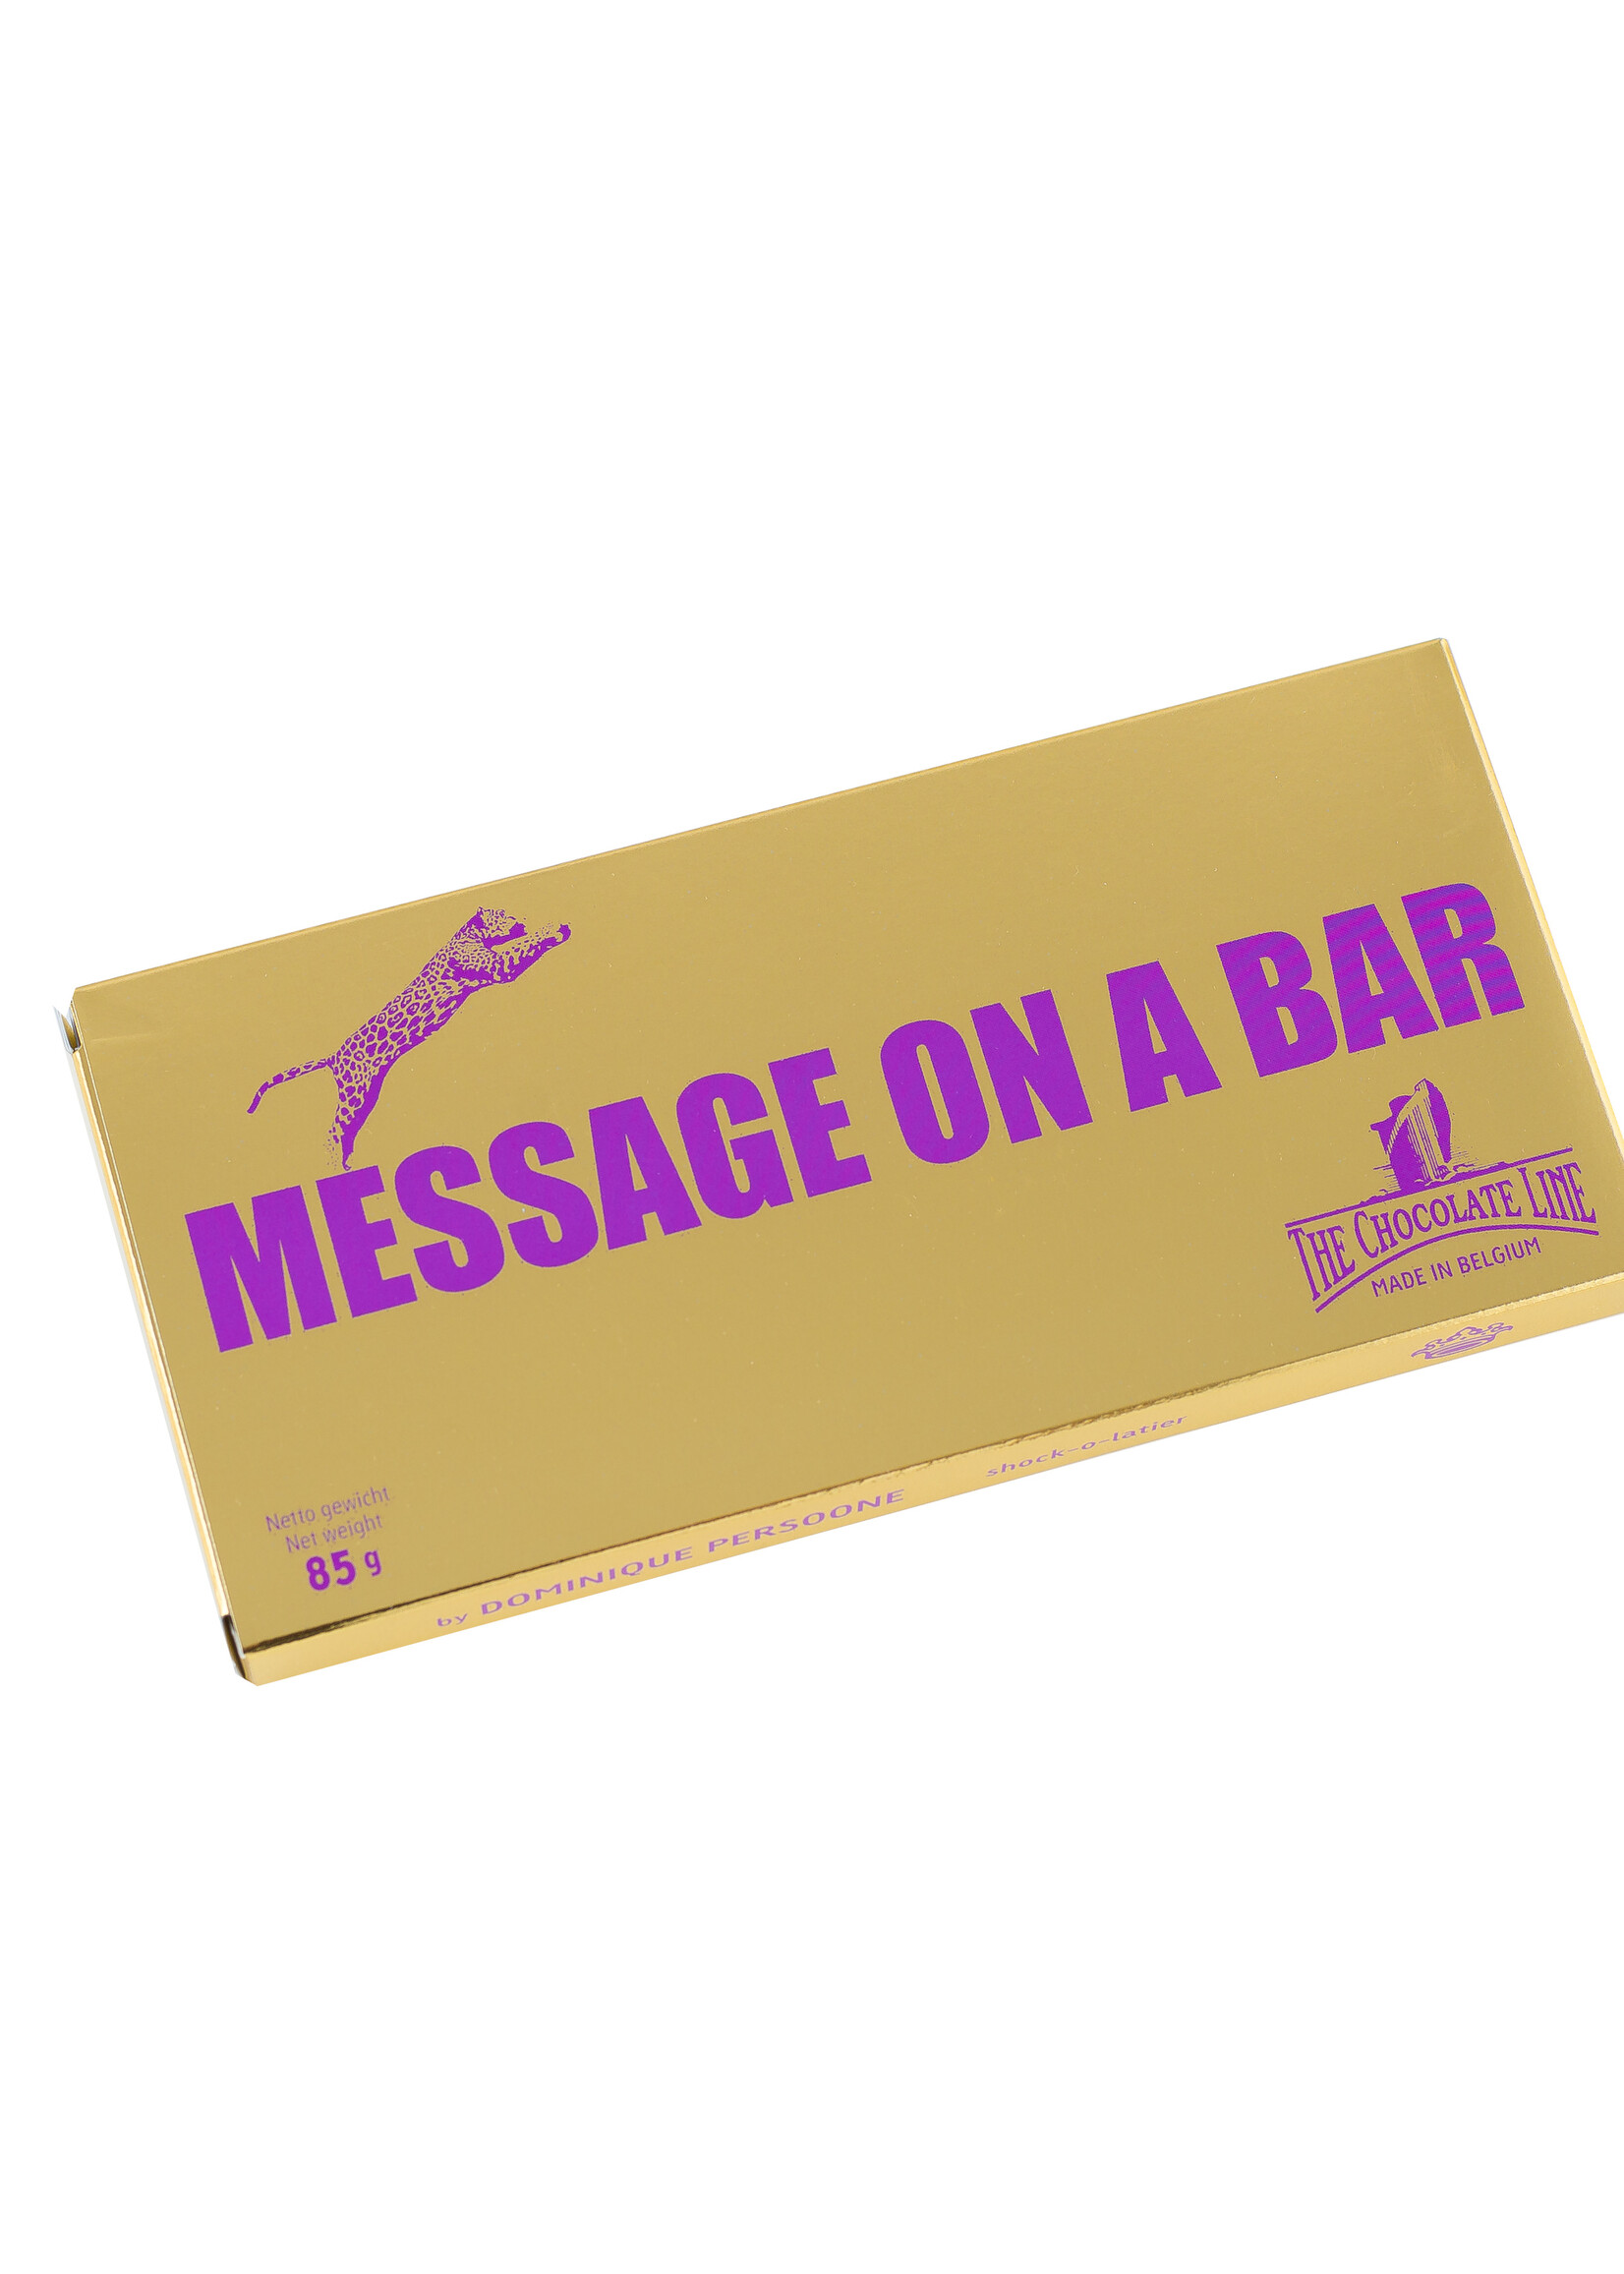 Message on a bar - DIY